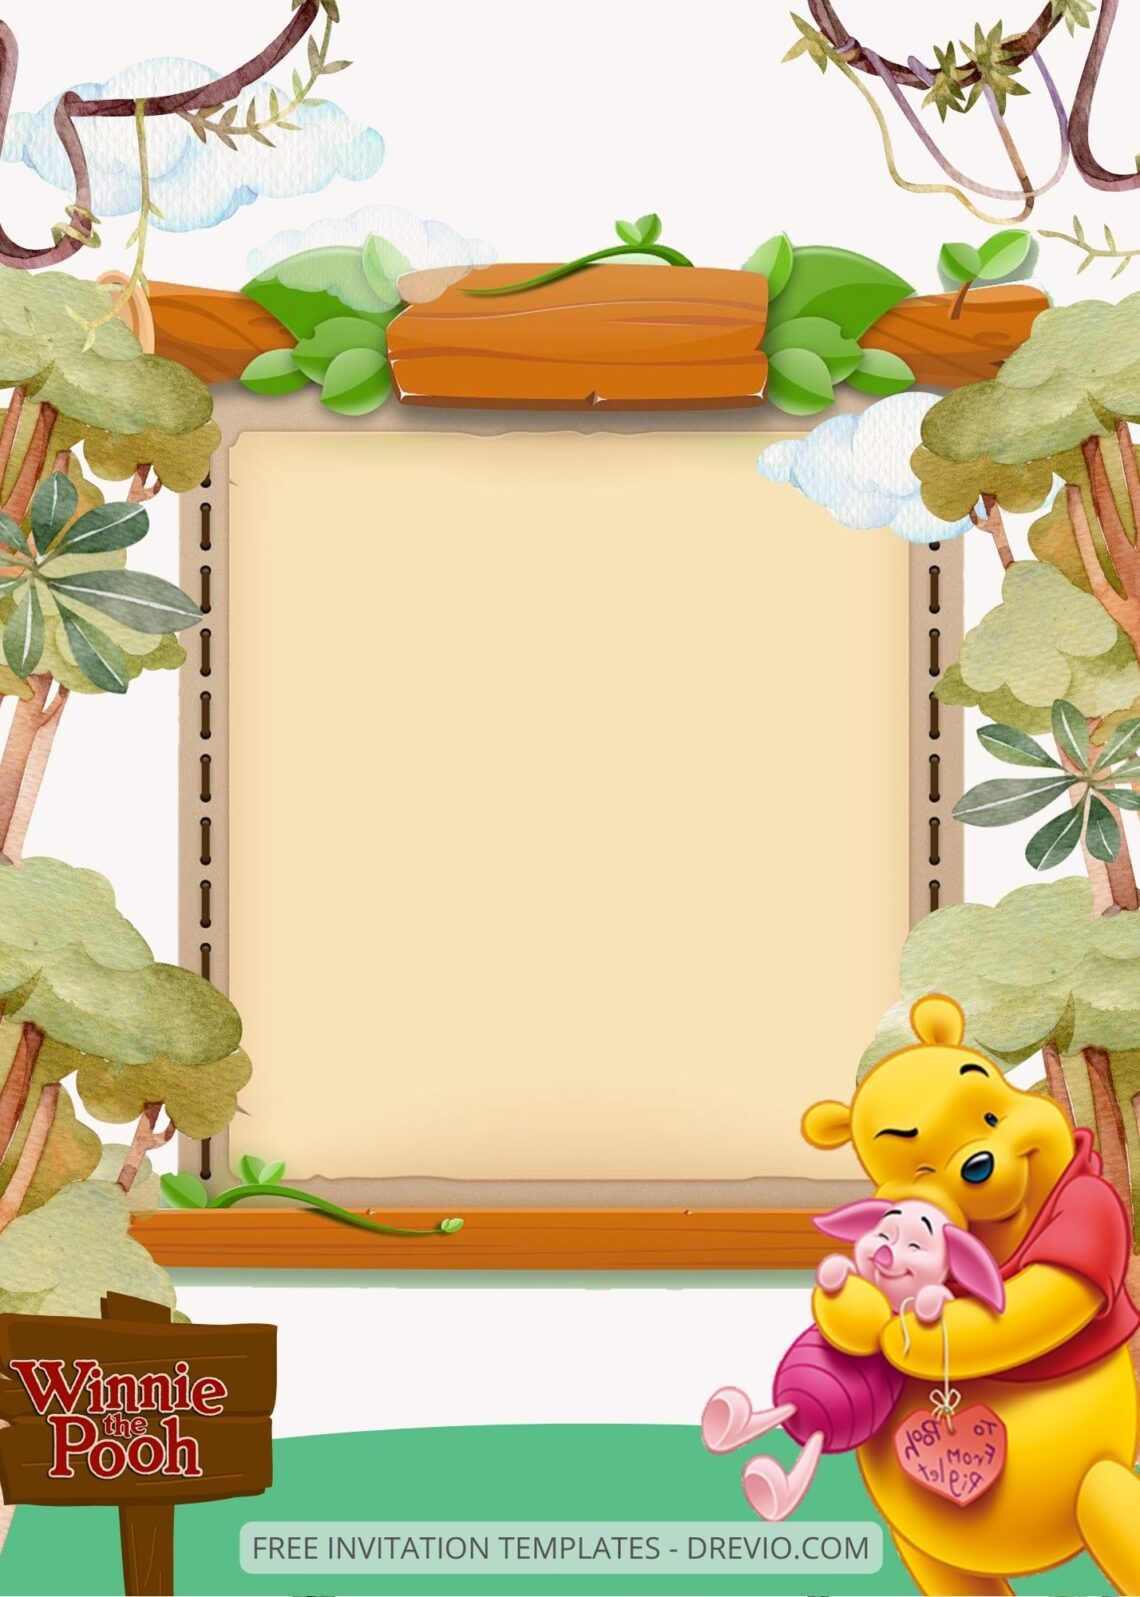 FREE EDITABLE - 9+ Winnie The Pooh Canva Birthday Invitation Templates Seven